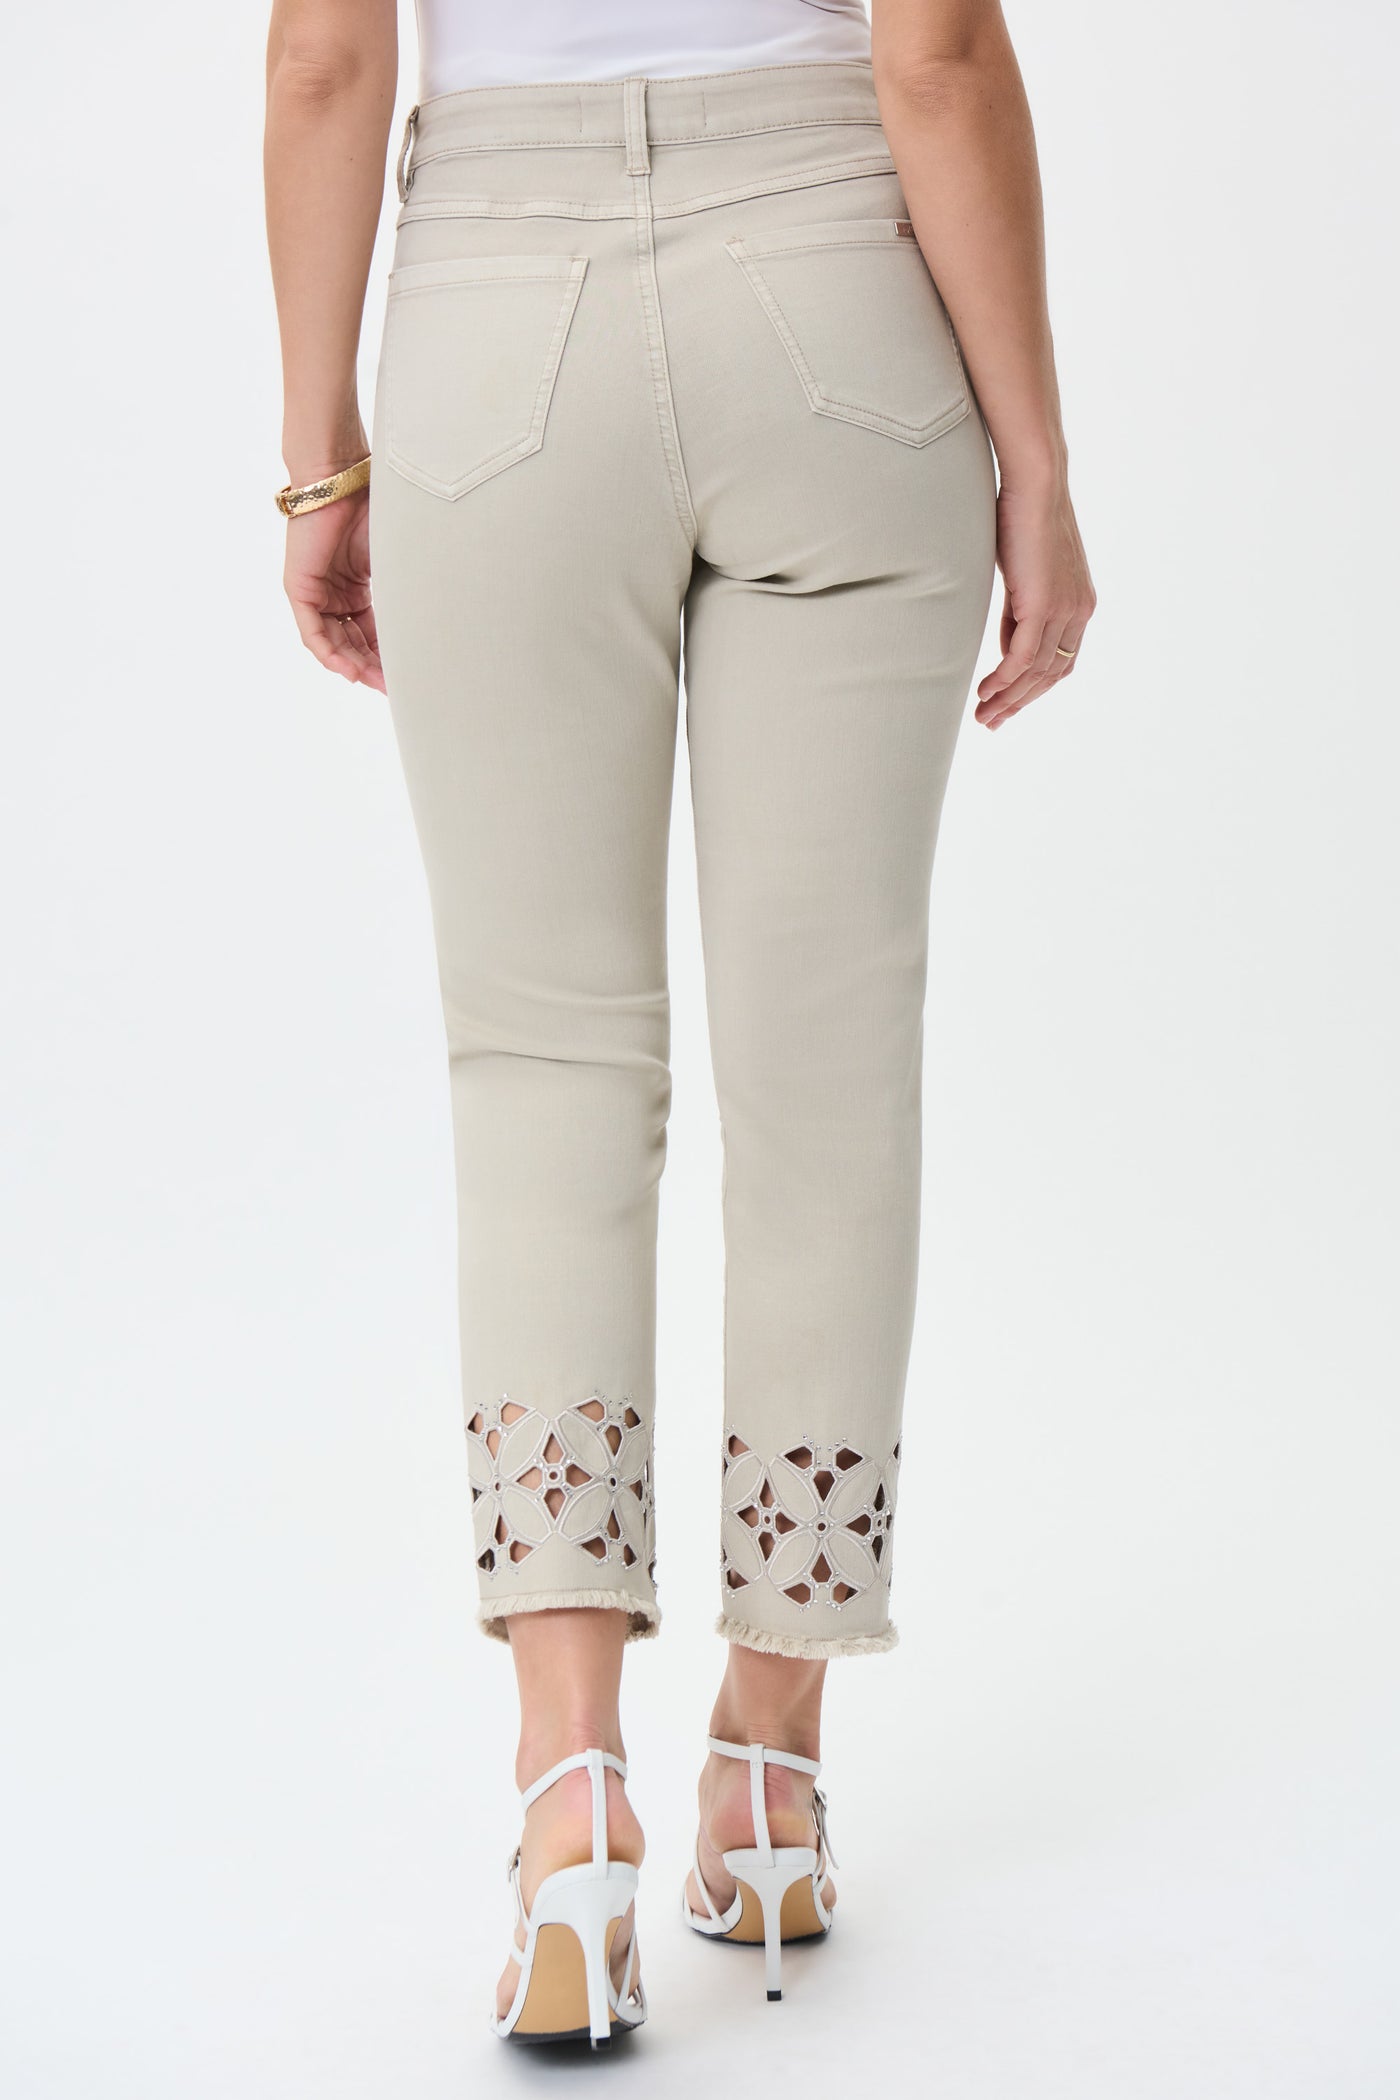 Joseph Ribkoff Slim Cropped Jeans Style 231960 